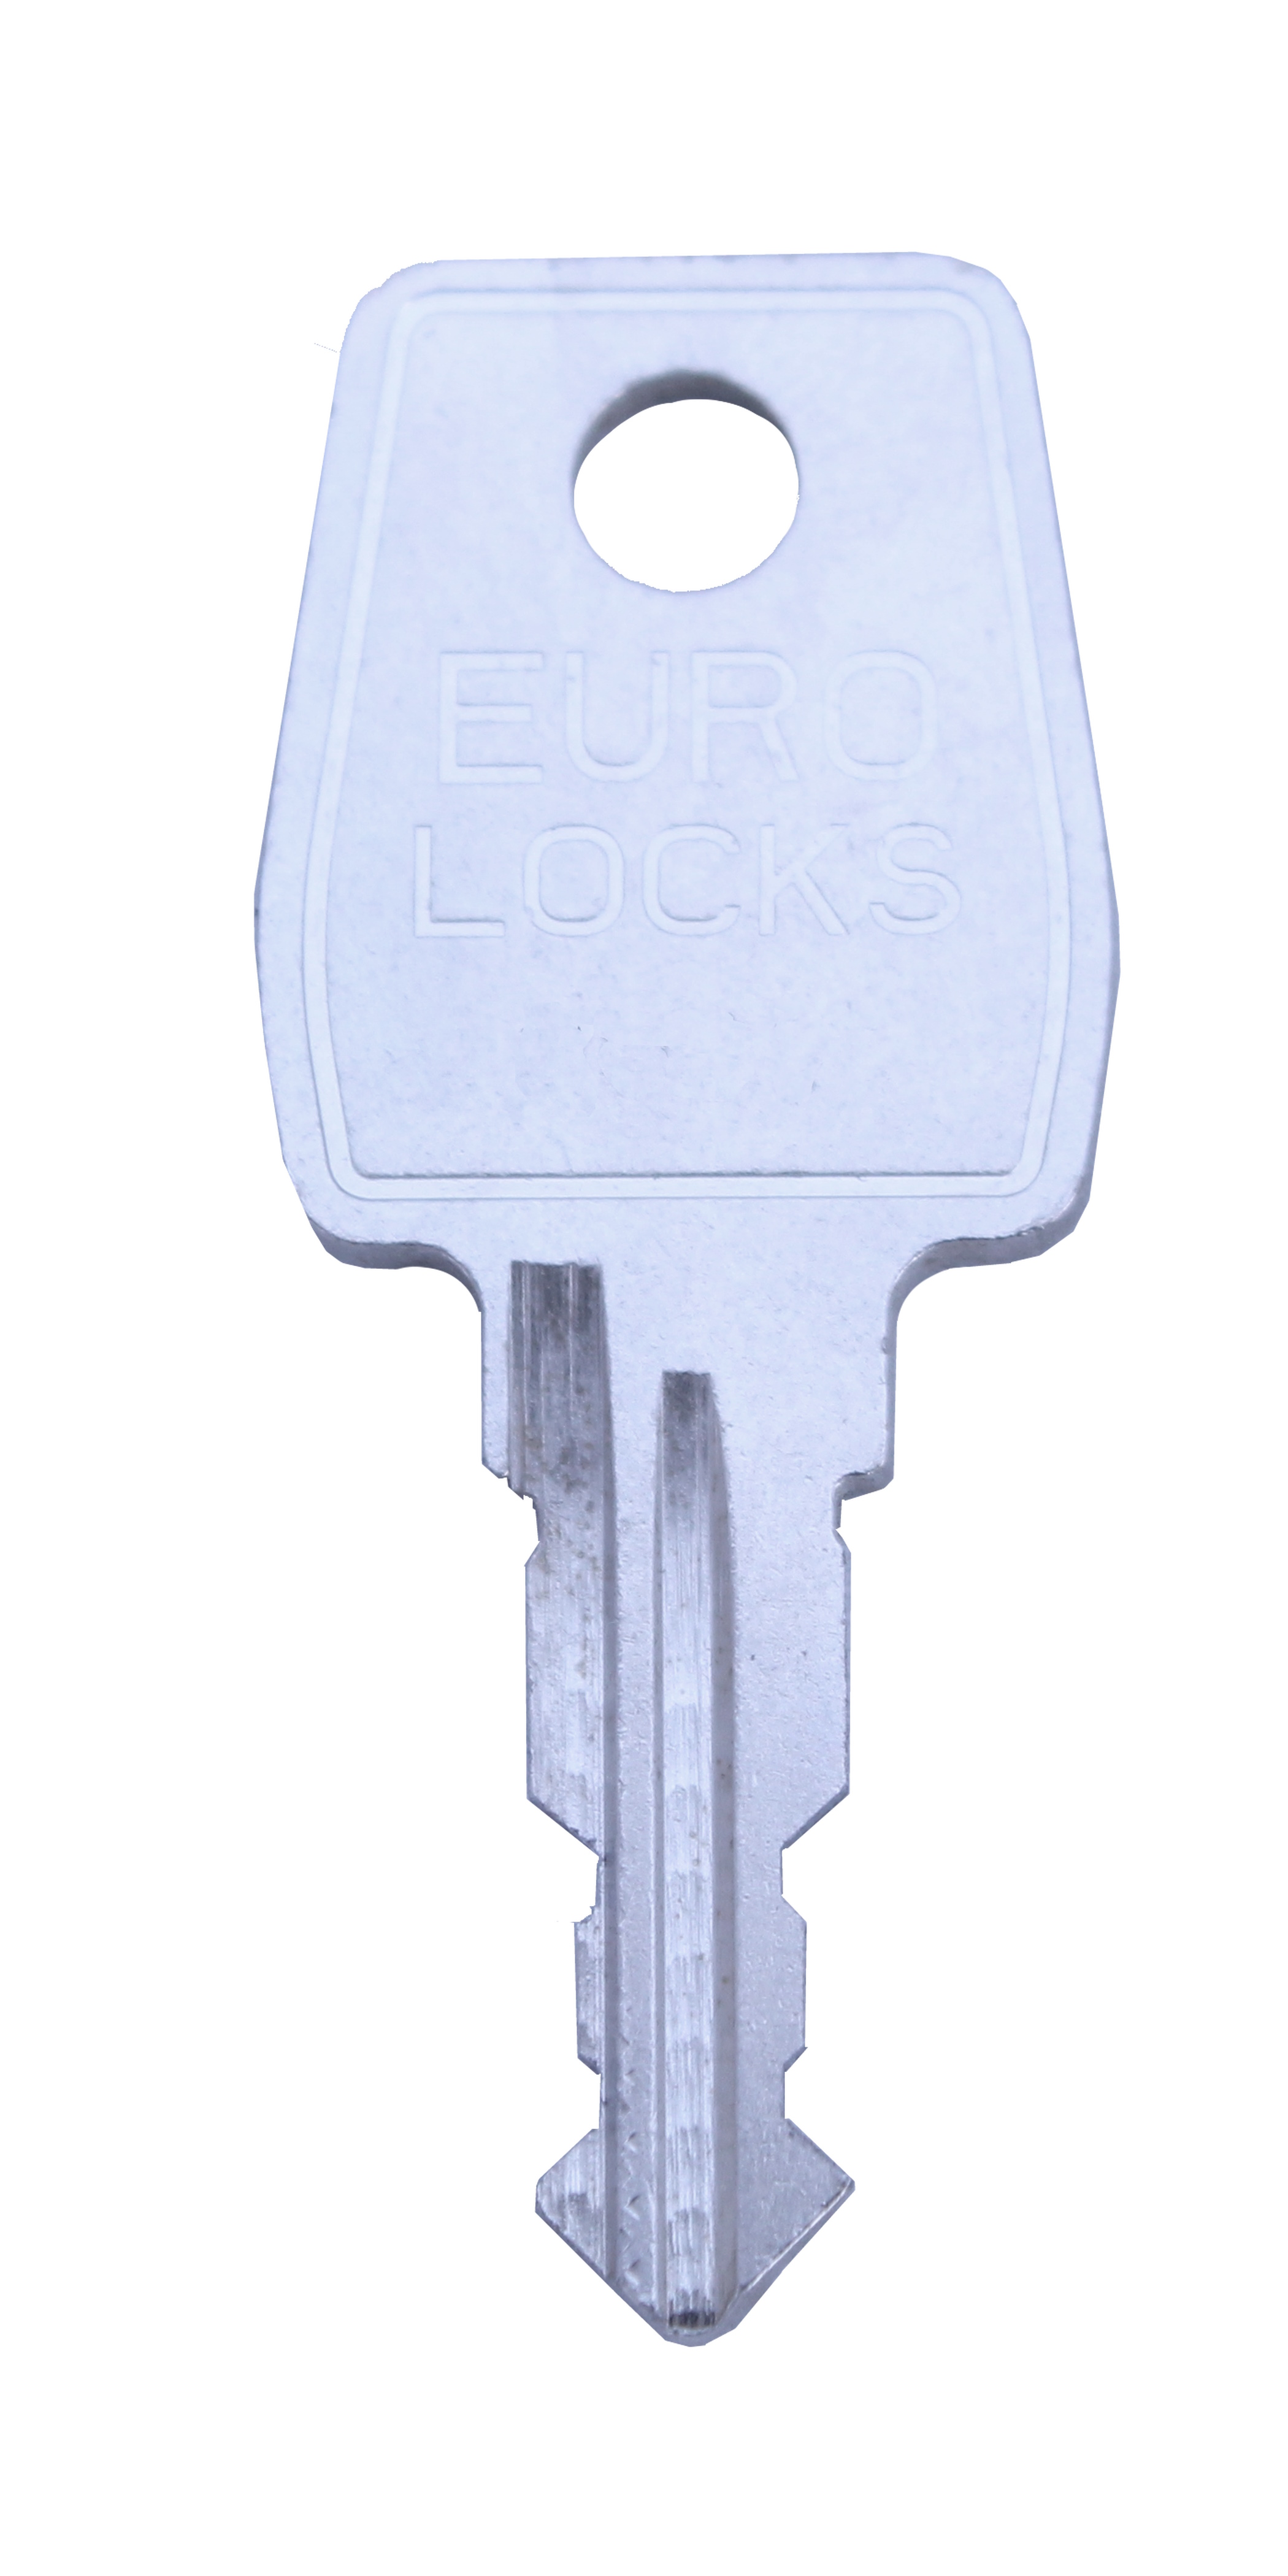 EUROLOCKS Schlüssel - SK 9001 - 9500